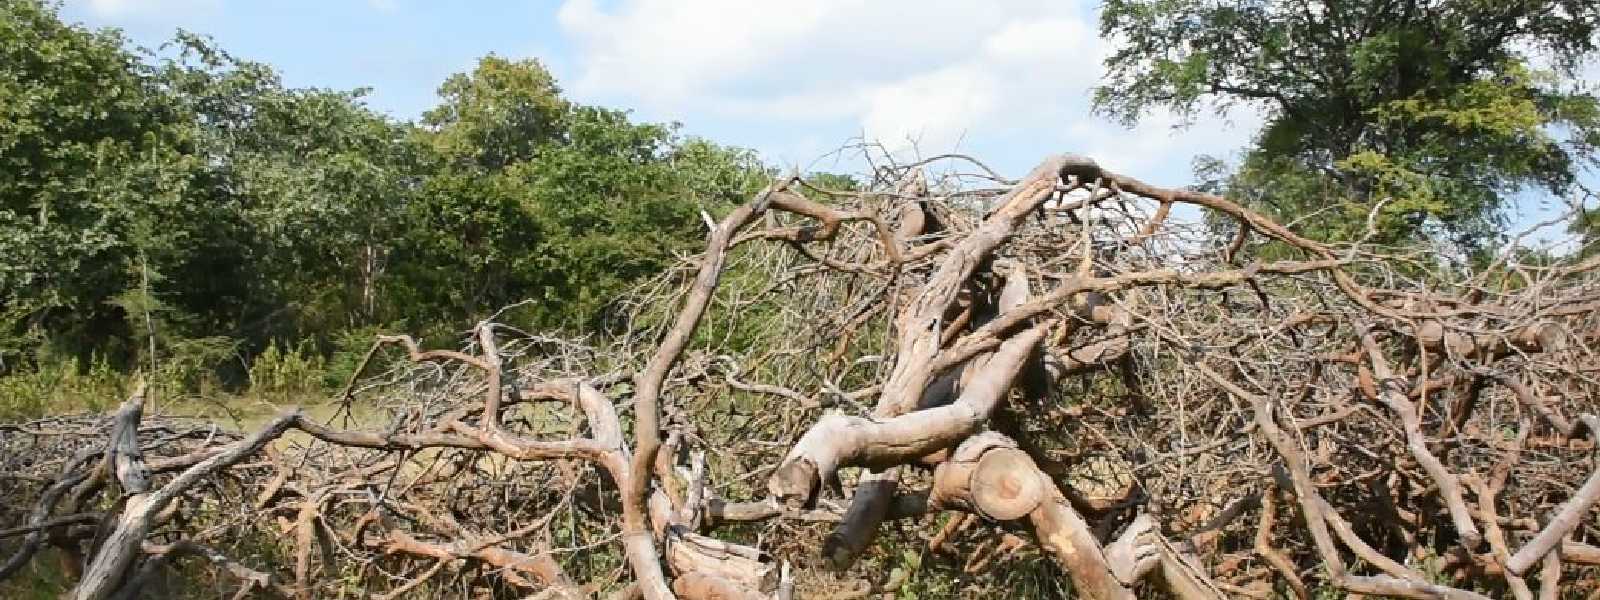 DESTRUCTION OF FORESTS IN DAHAIYAGALA